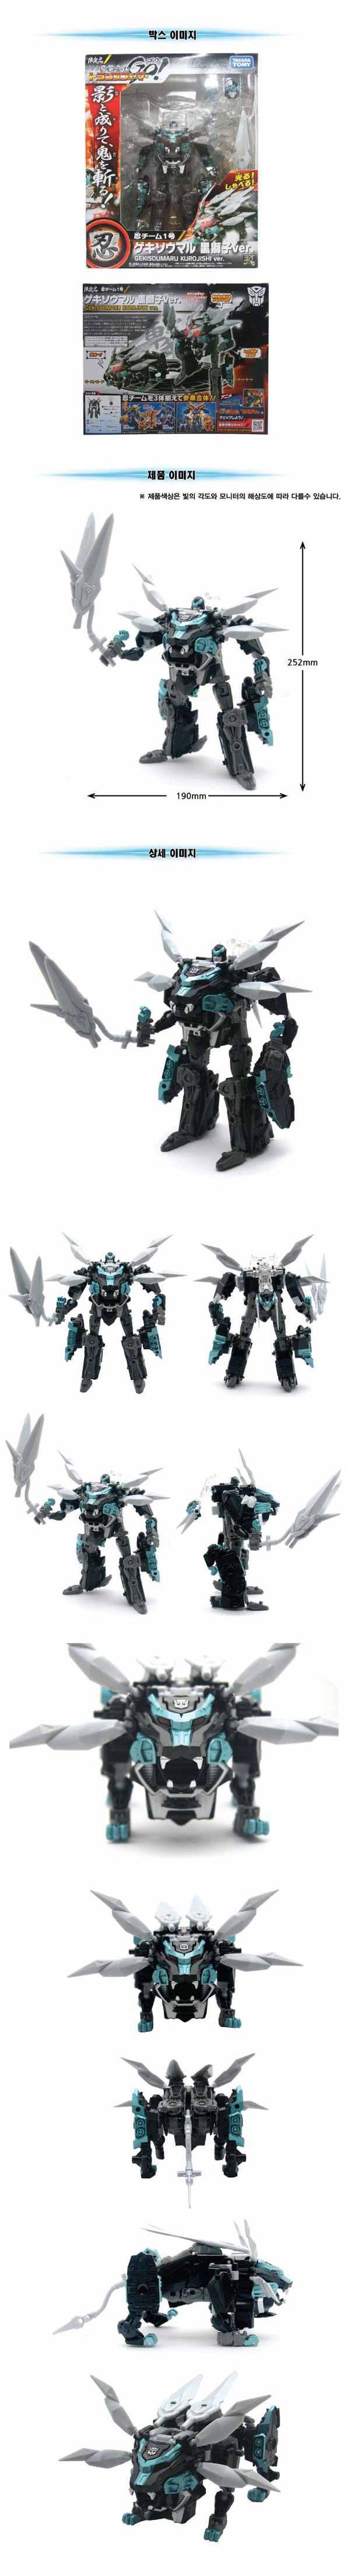 Official Images Of Transformers Go! G01 Kenzan Black, G05 Gekisomaru Black,  BeCool Swordbot Samurai Team  (2 of 3)